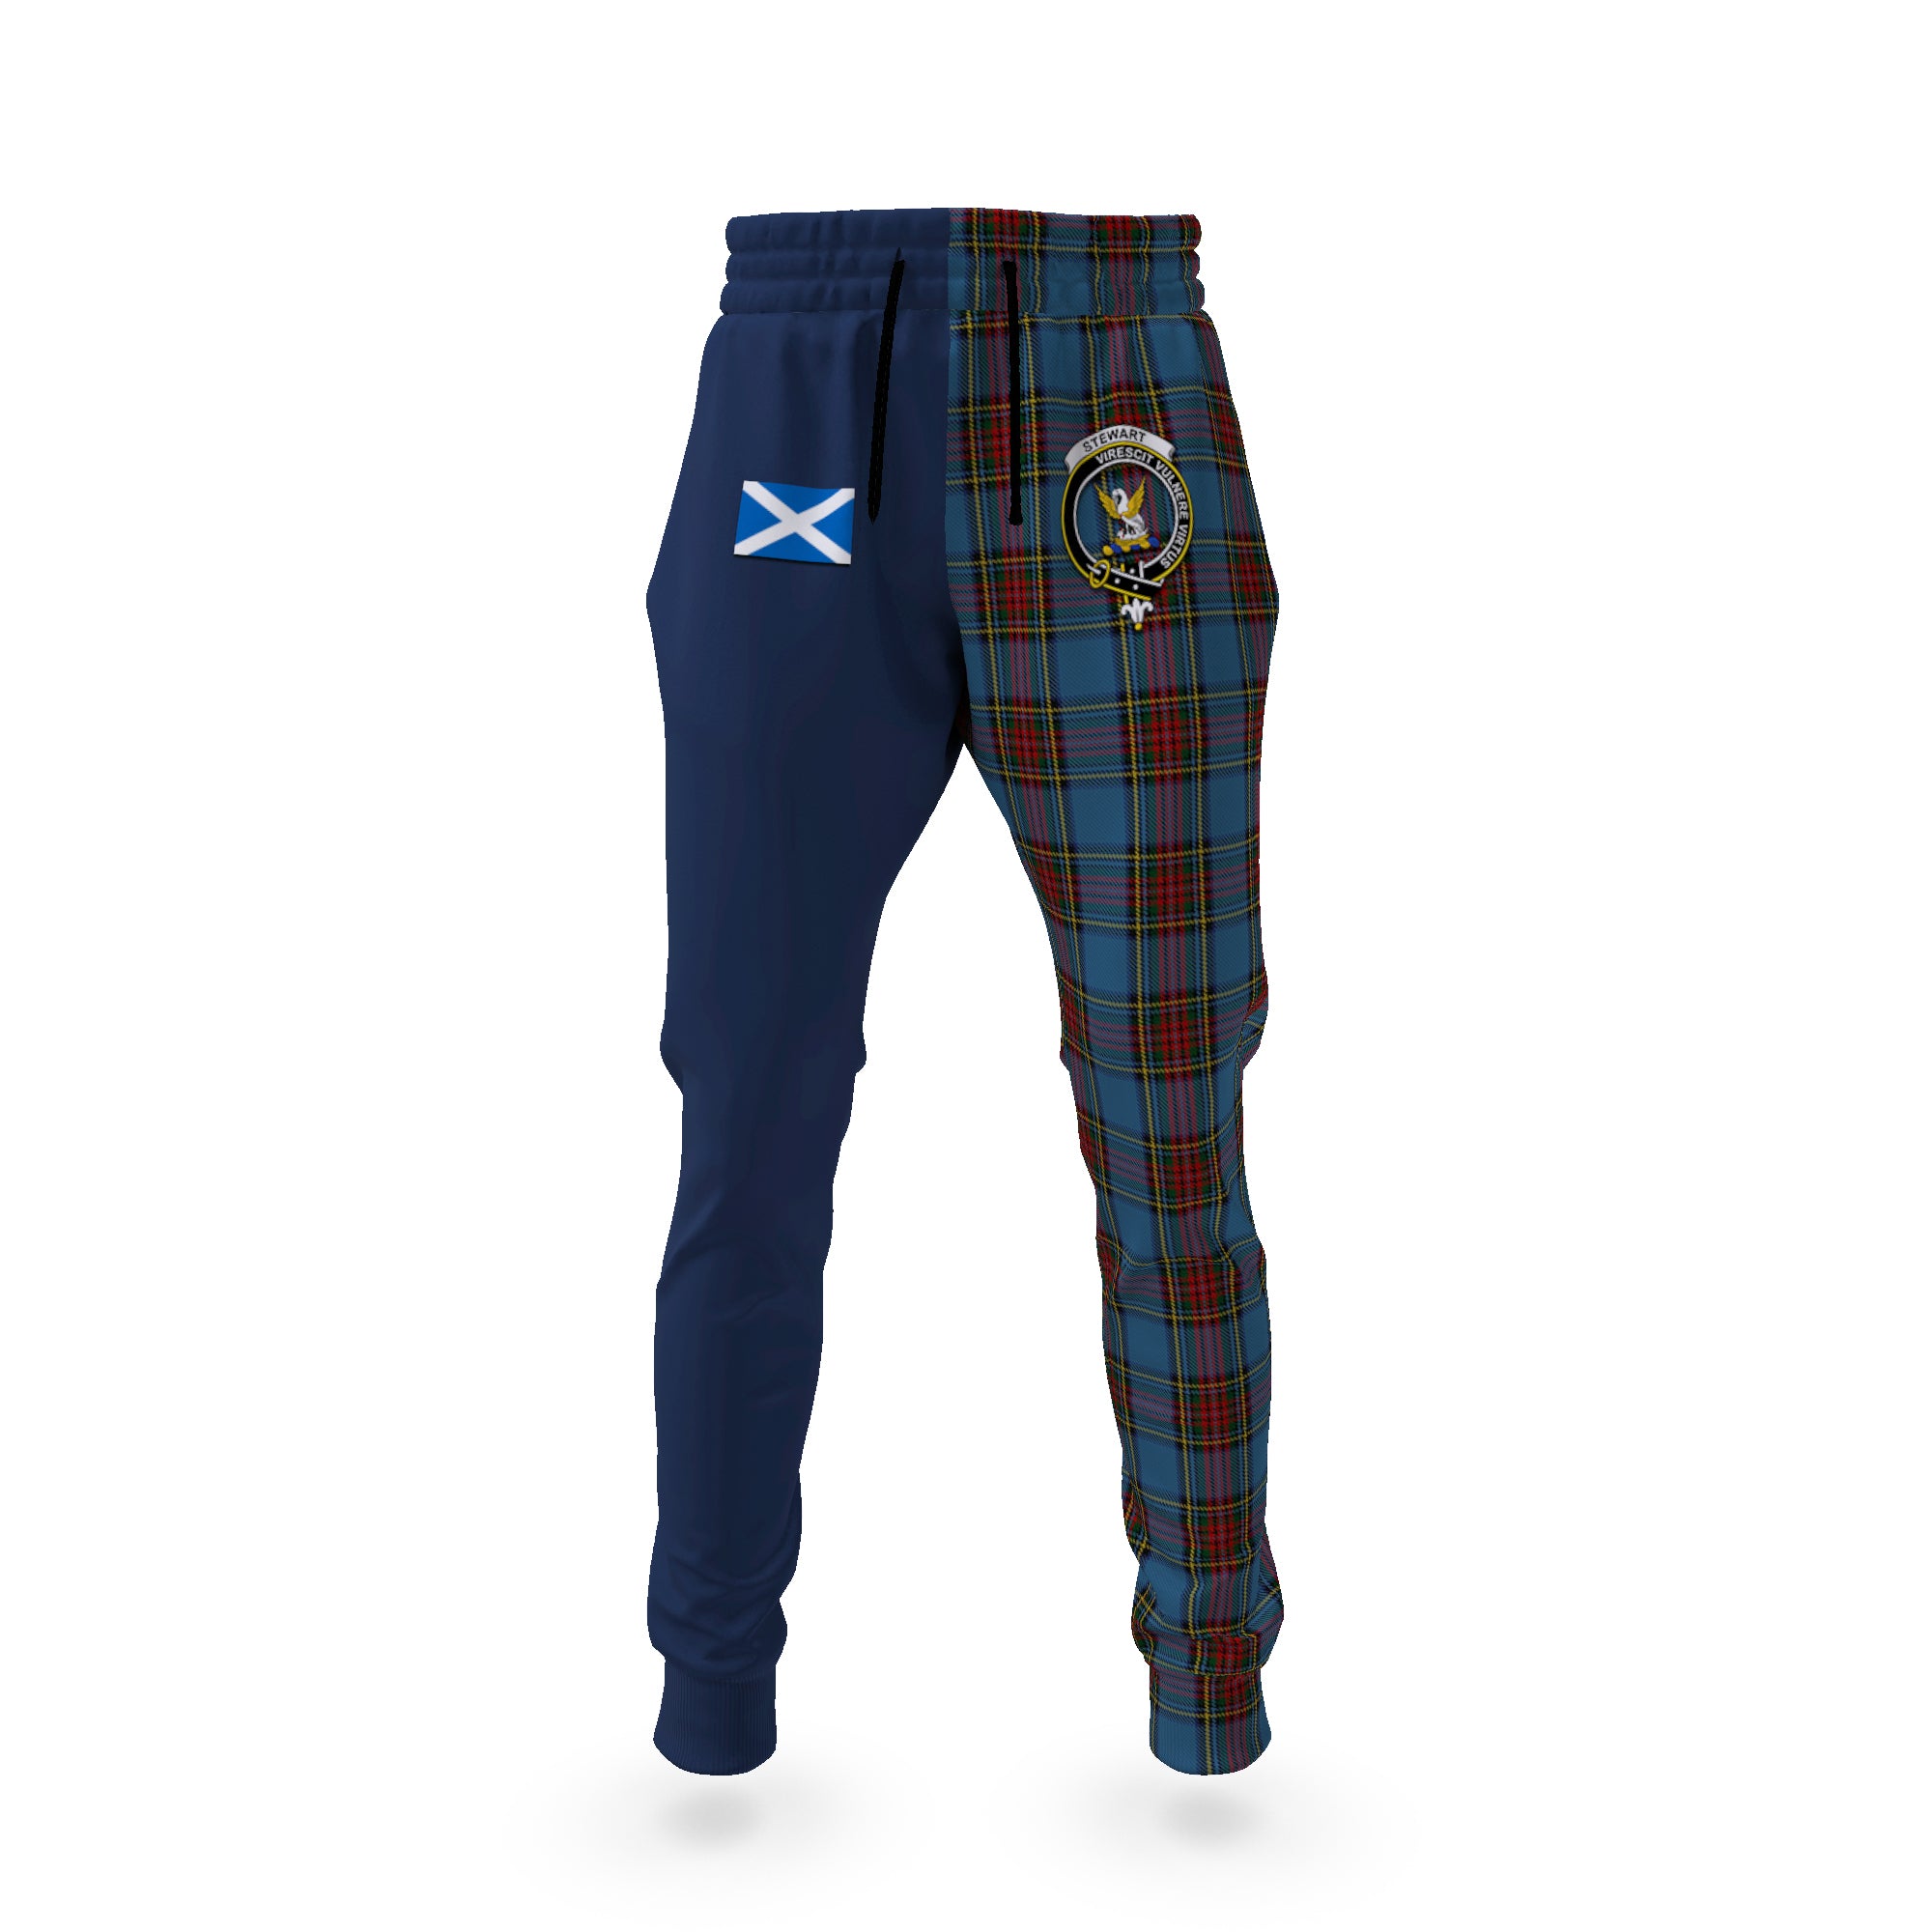 stewart-royal-blue-tartan-plaid-joggers-family-crest-tartan-joggers-with-scottish-flag-half-style